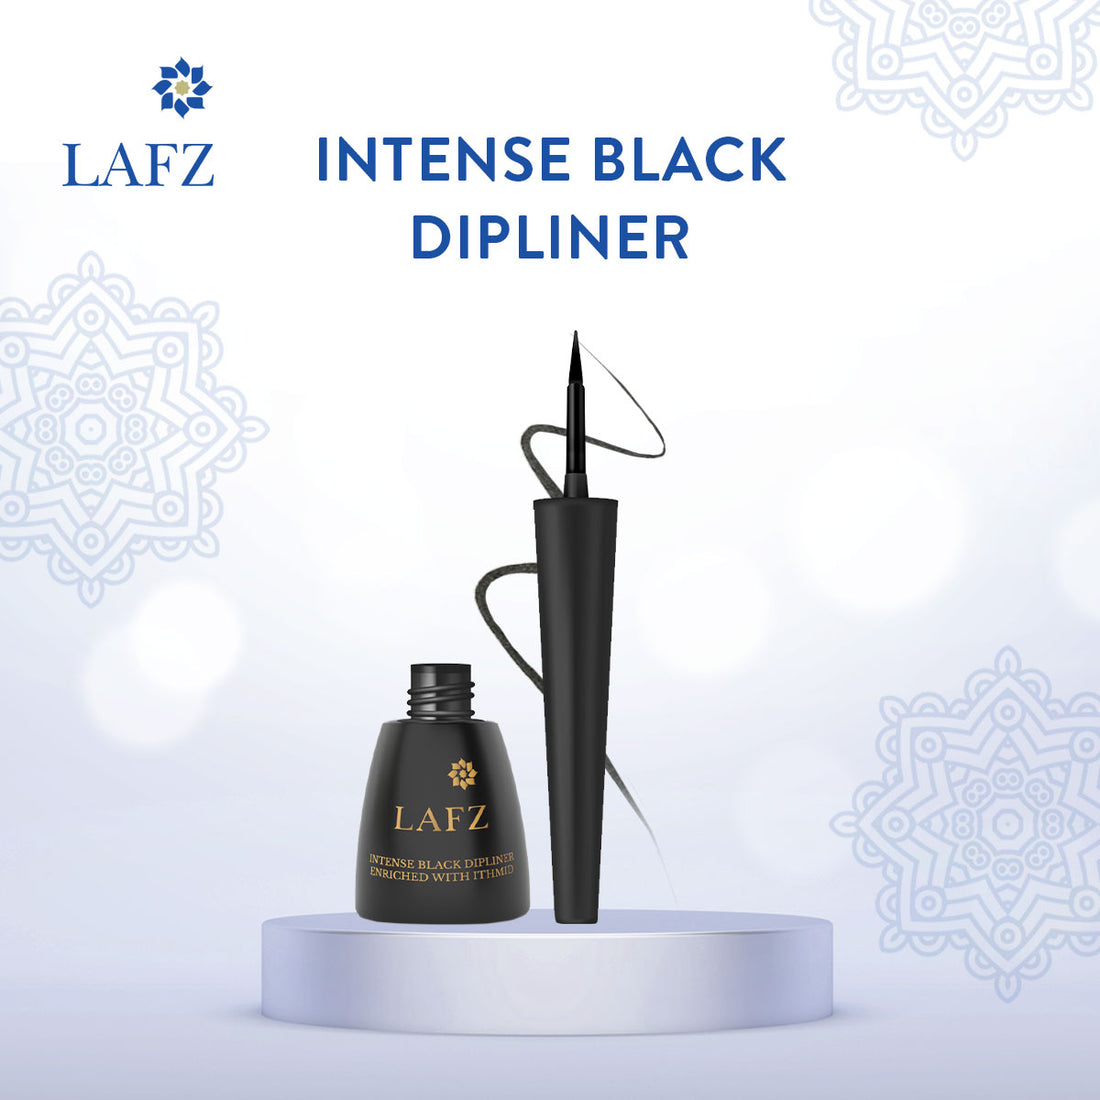 Lafz Intense Black Dipliner (10ml)